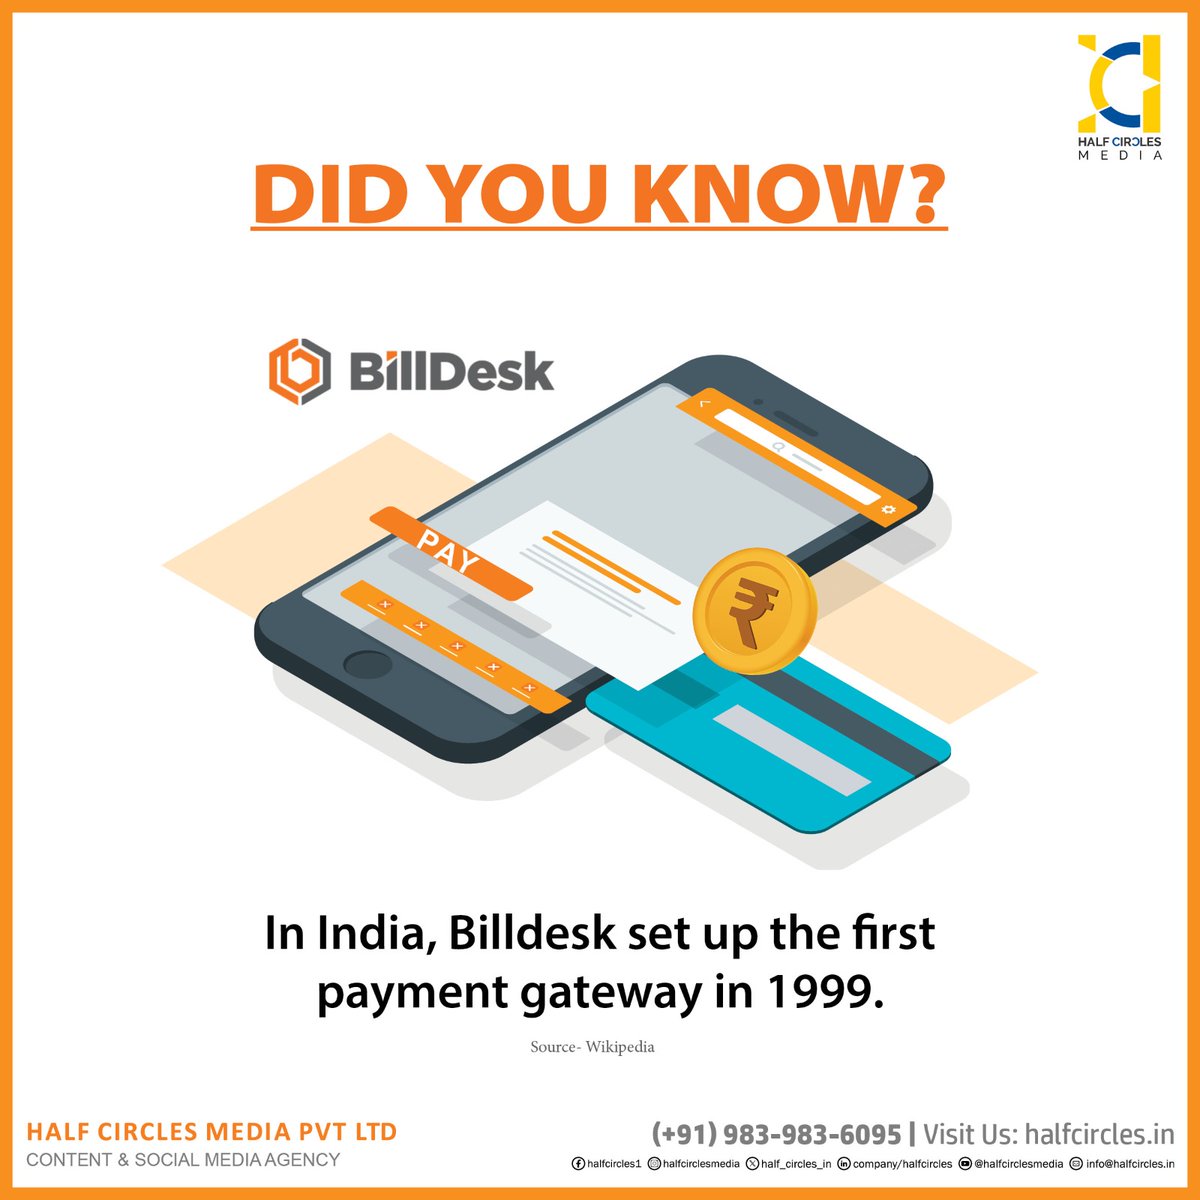 #DidYouKnow  when the #firstpaymentgateway was done in India?
#billdesk #paymentgateway  #halfcirclesmedia #digitalmarketing #digitalmarketingfacts